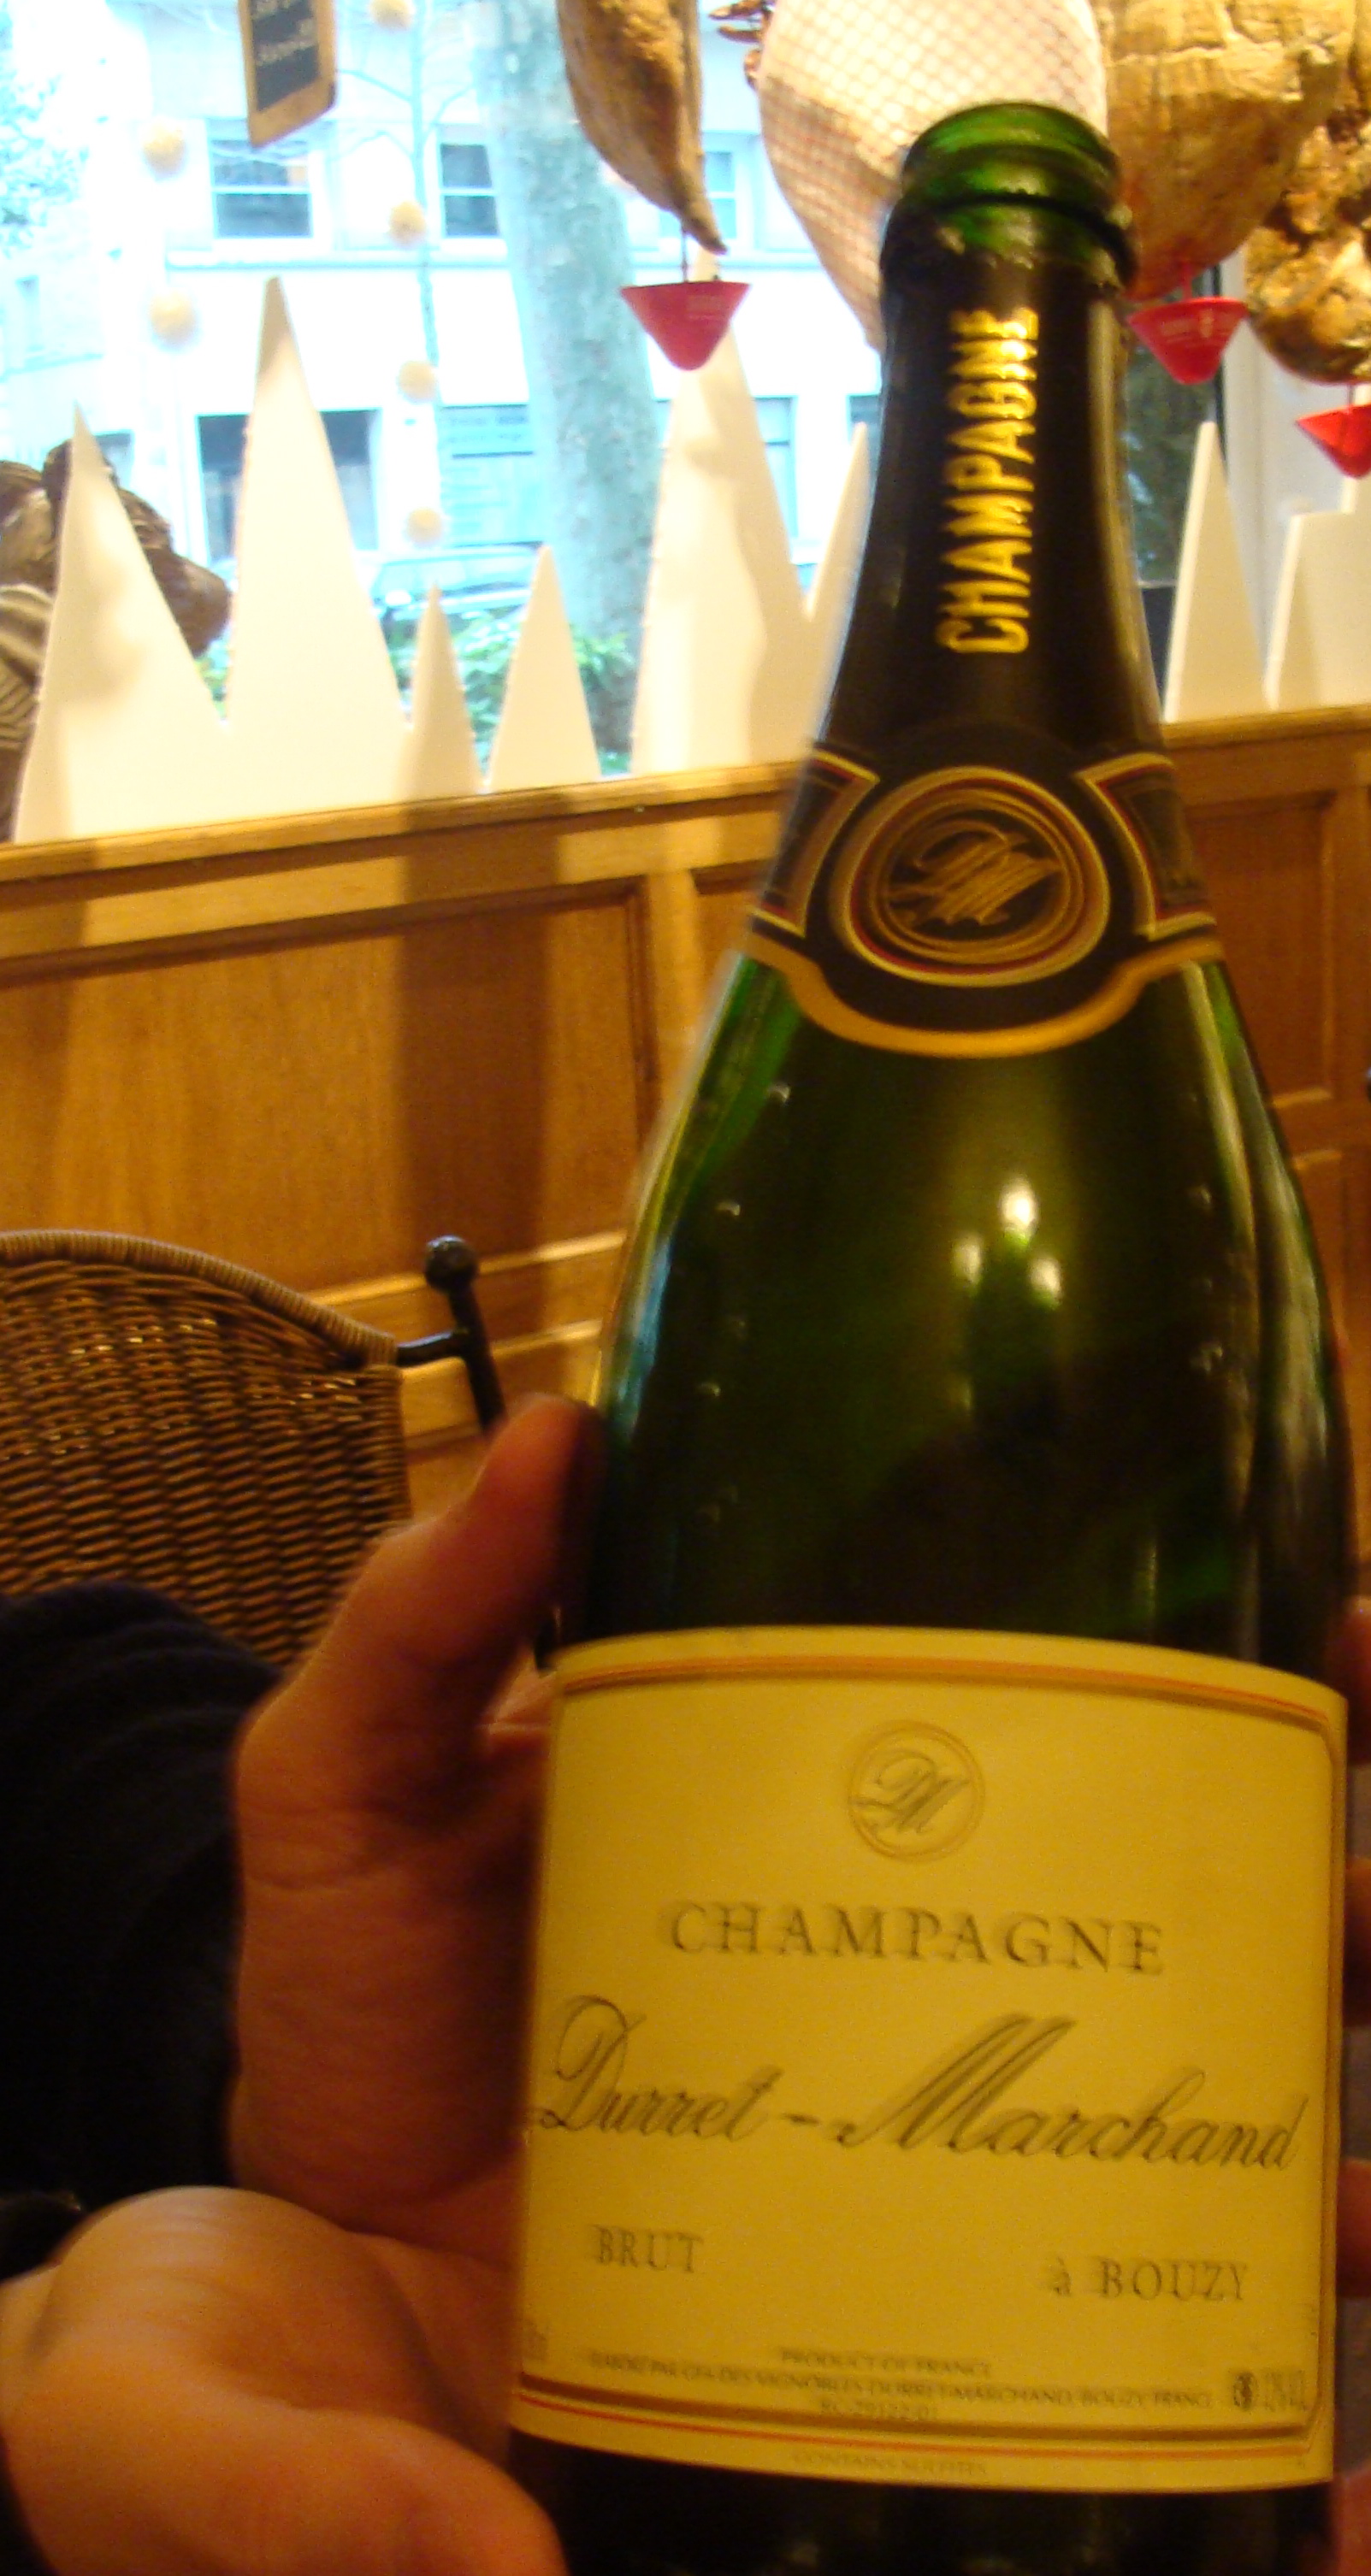 Champagne Duret-Marchant Brut